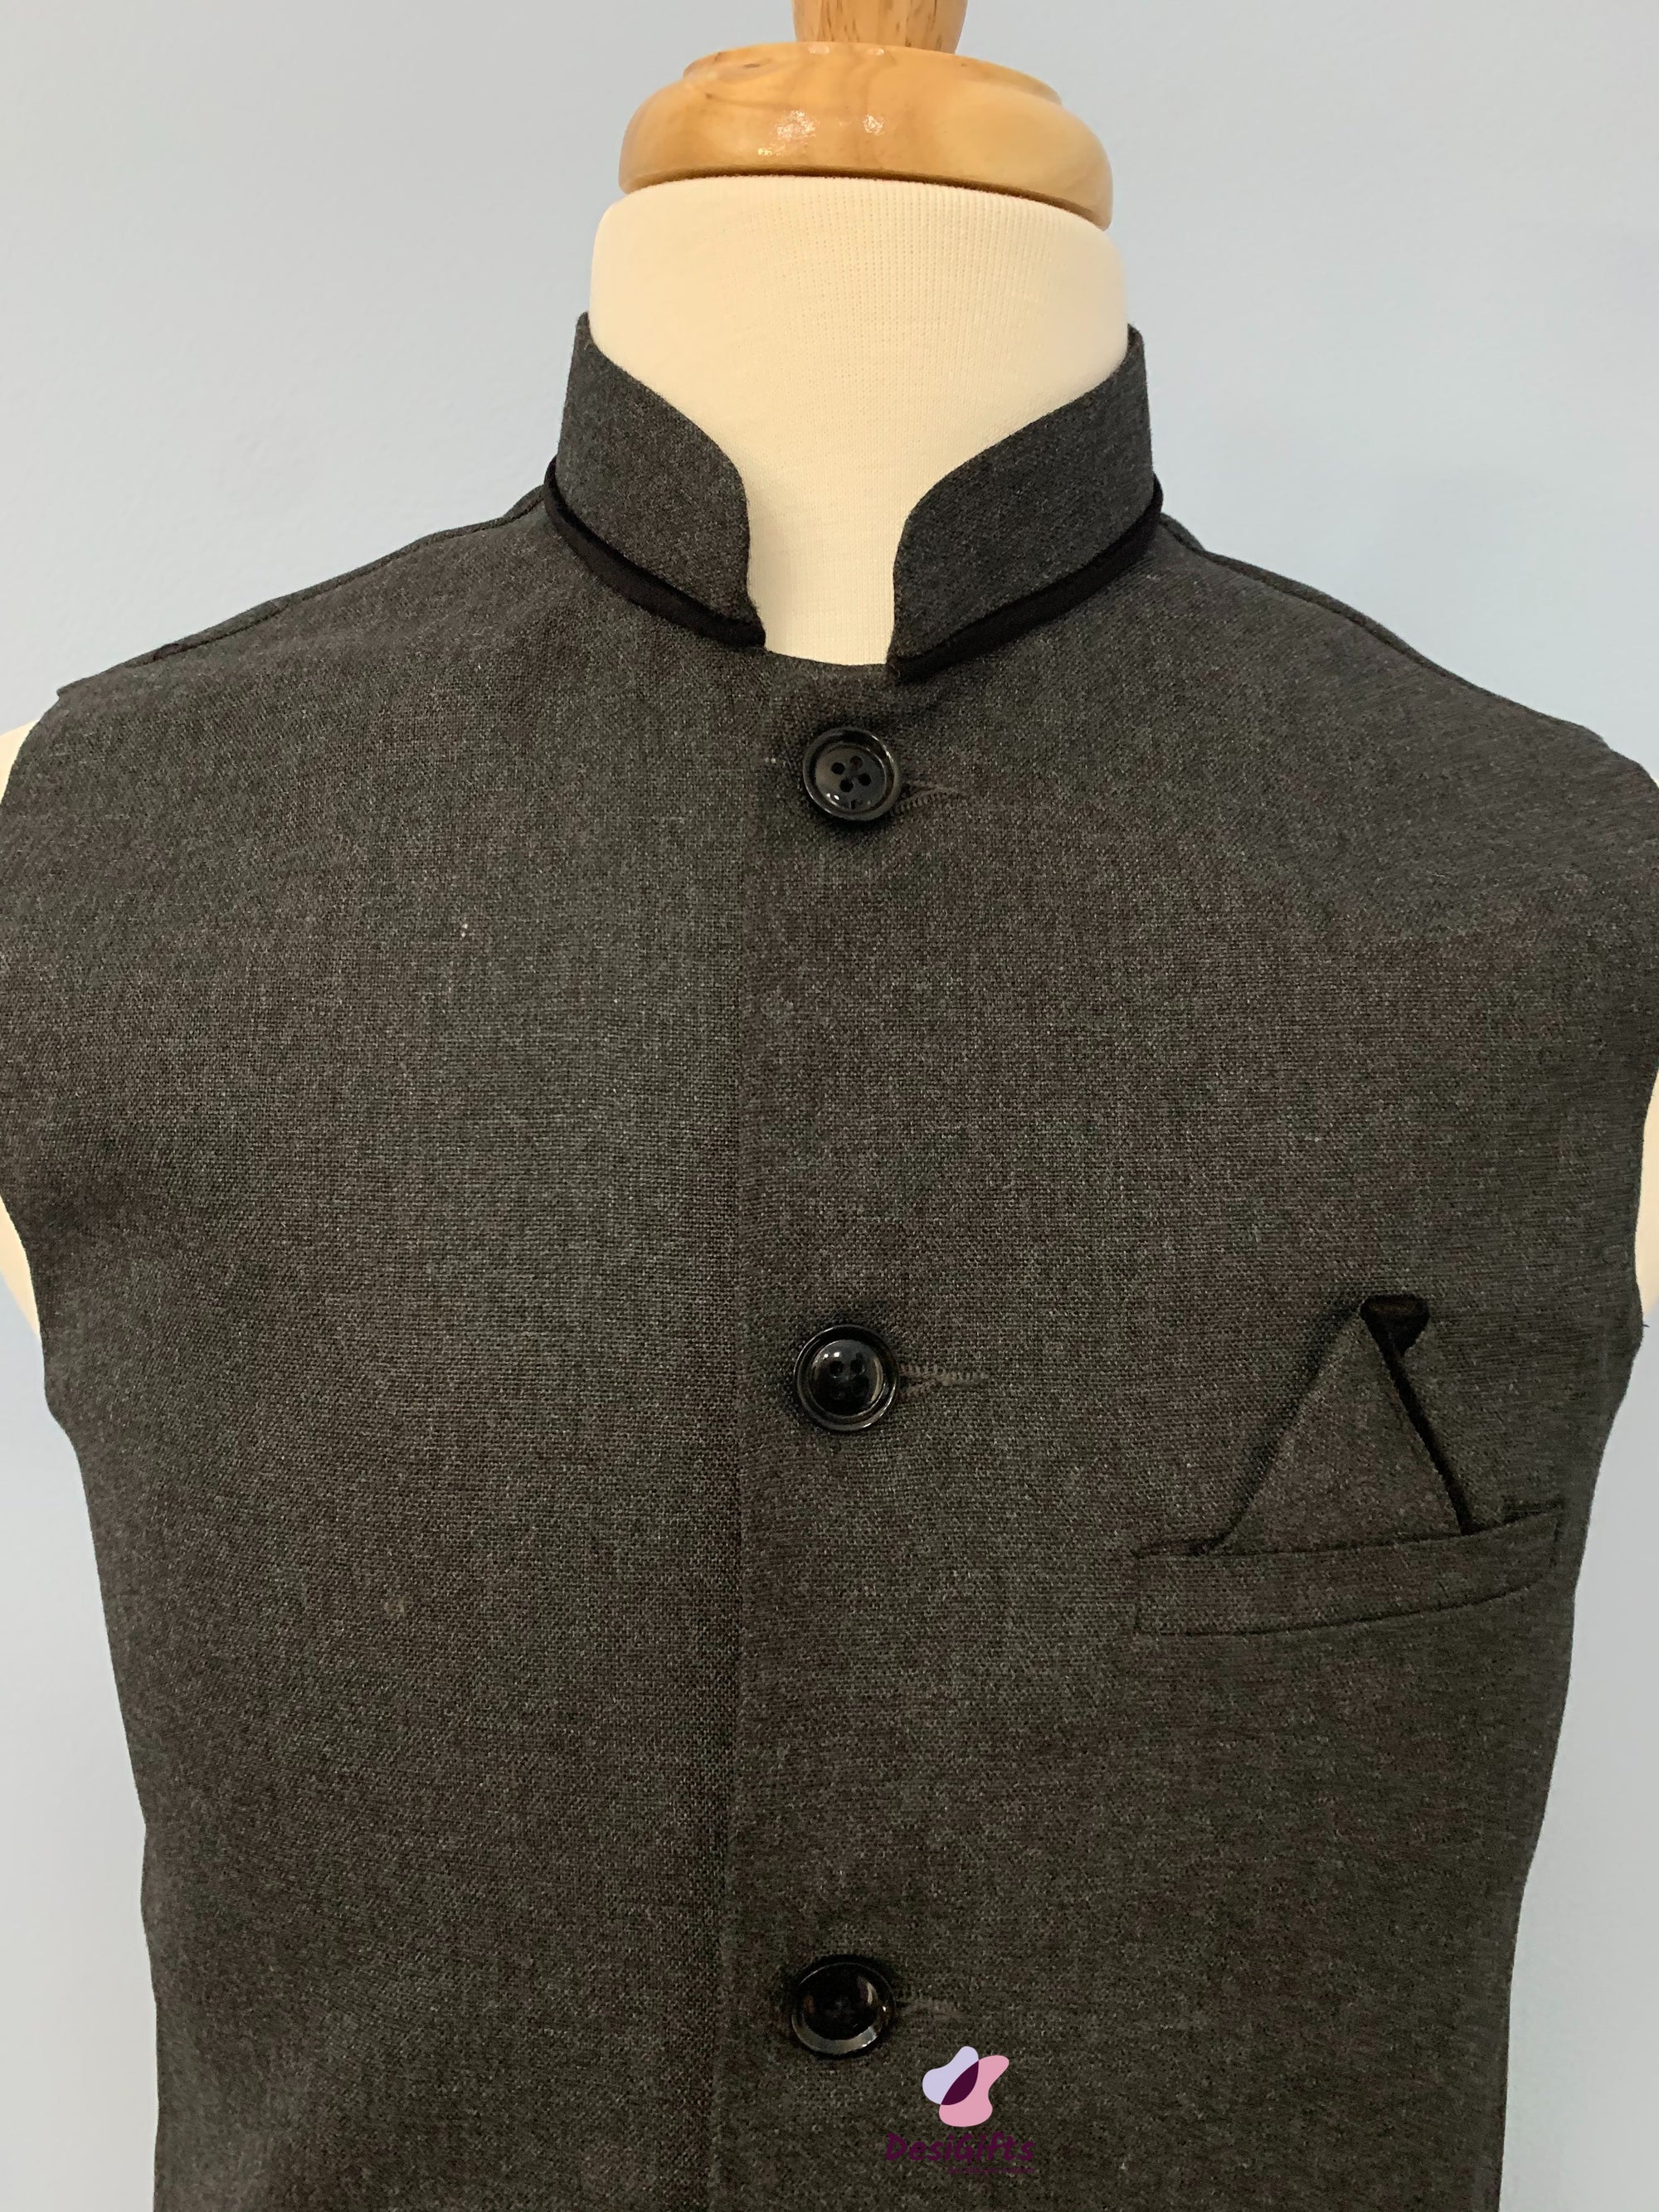 Plus Size Woven Jute Cotton Nehru Style Jacket / Sadri-Design, MJ#BLK 361